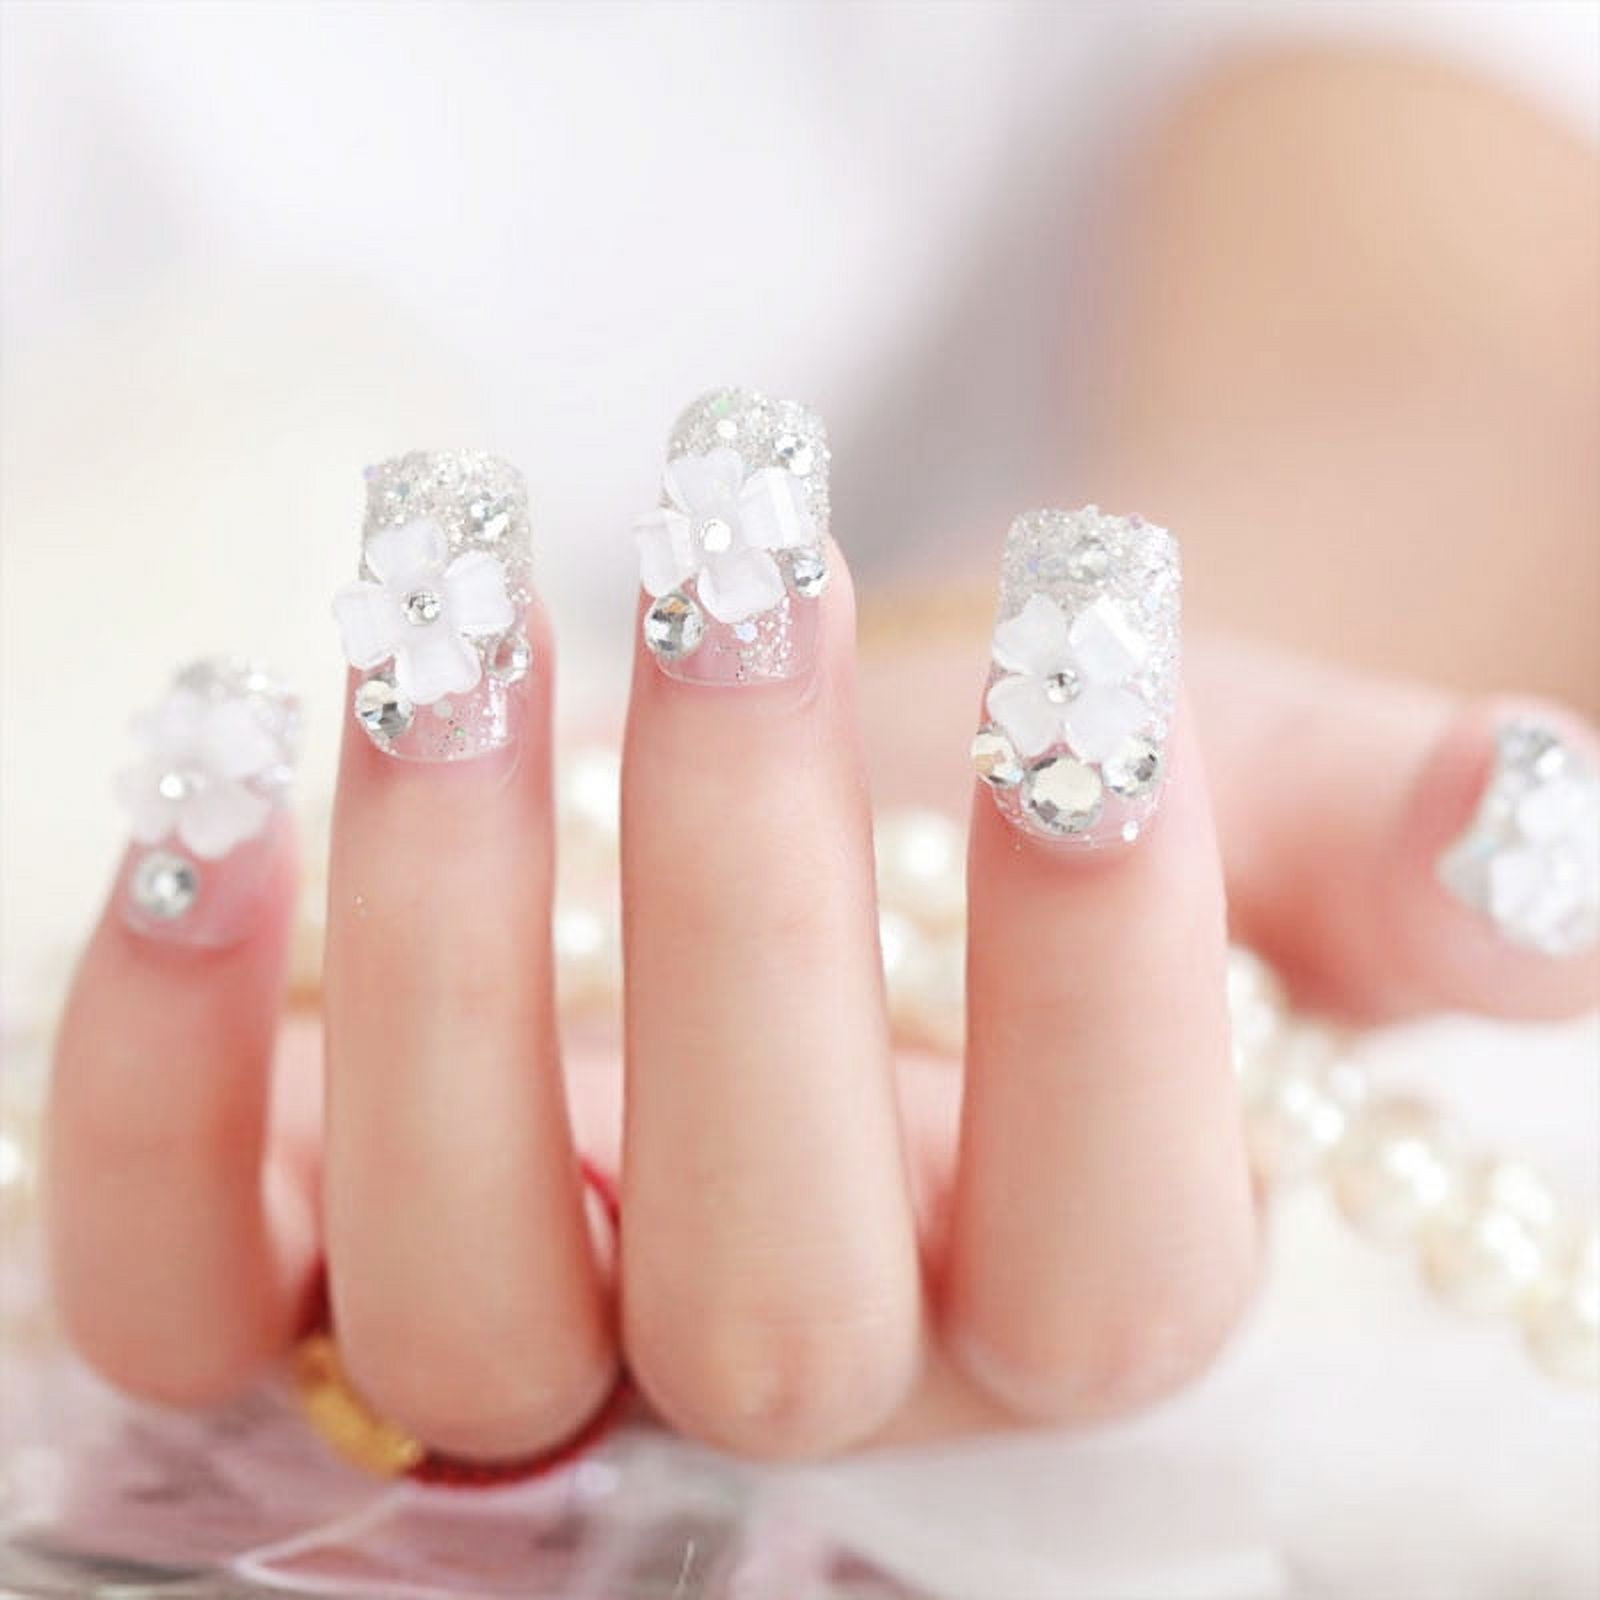 24PCS Wedding Bride Nail Art Tips 3D Flower Decal Women Fingernail Short Full Cover Fake False Nails With Glue 1fd1a77d f322 4c49 8754 57cd89fec5f3.c141b66f5572c8c60f653d2cef8fa4df